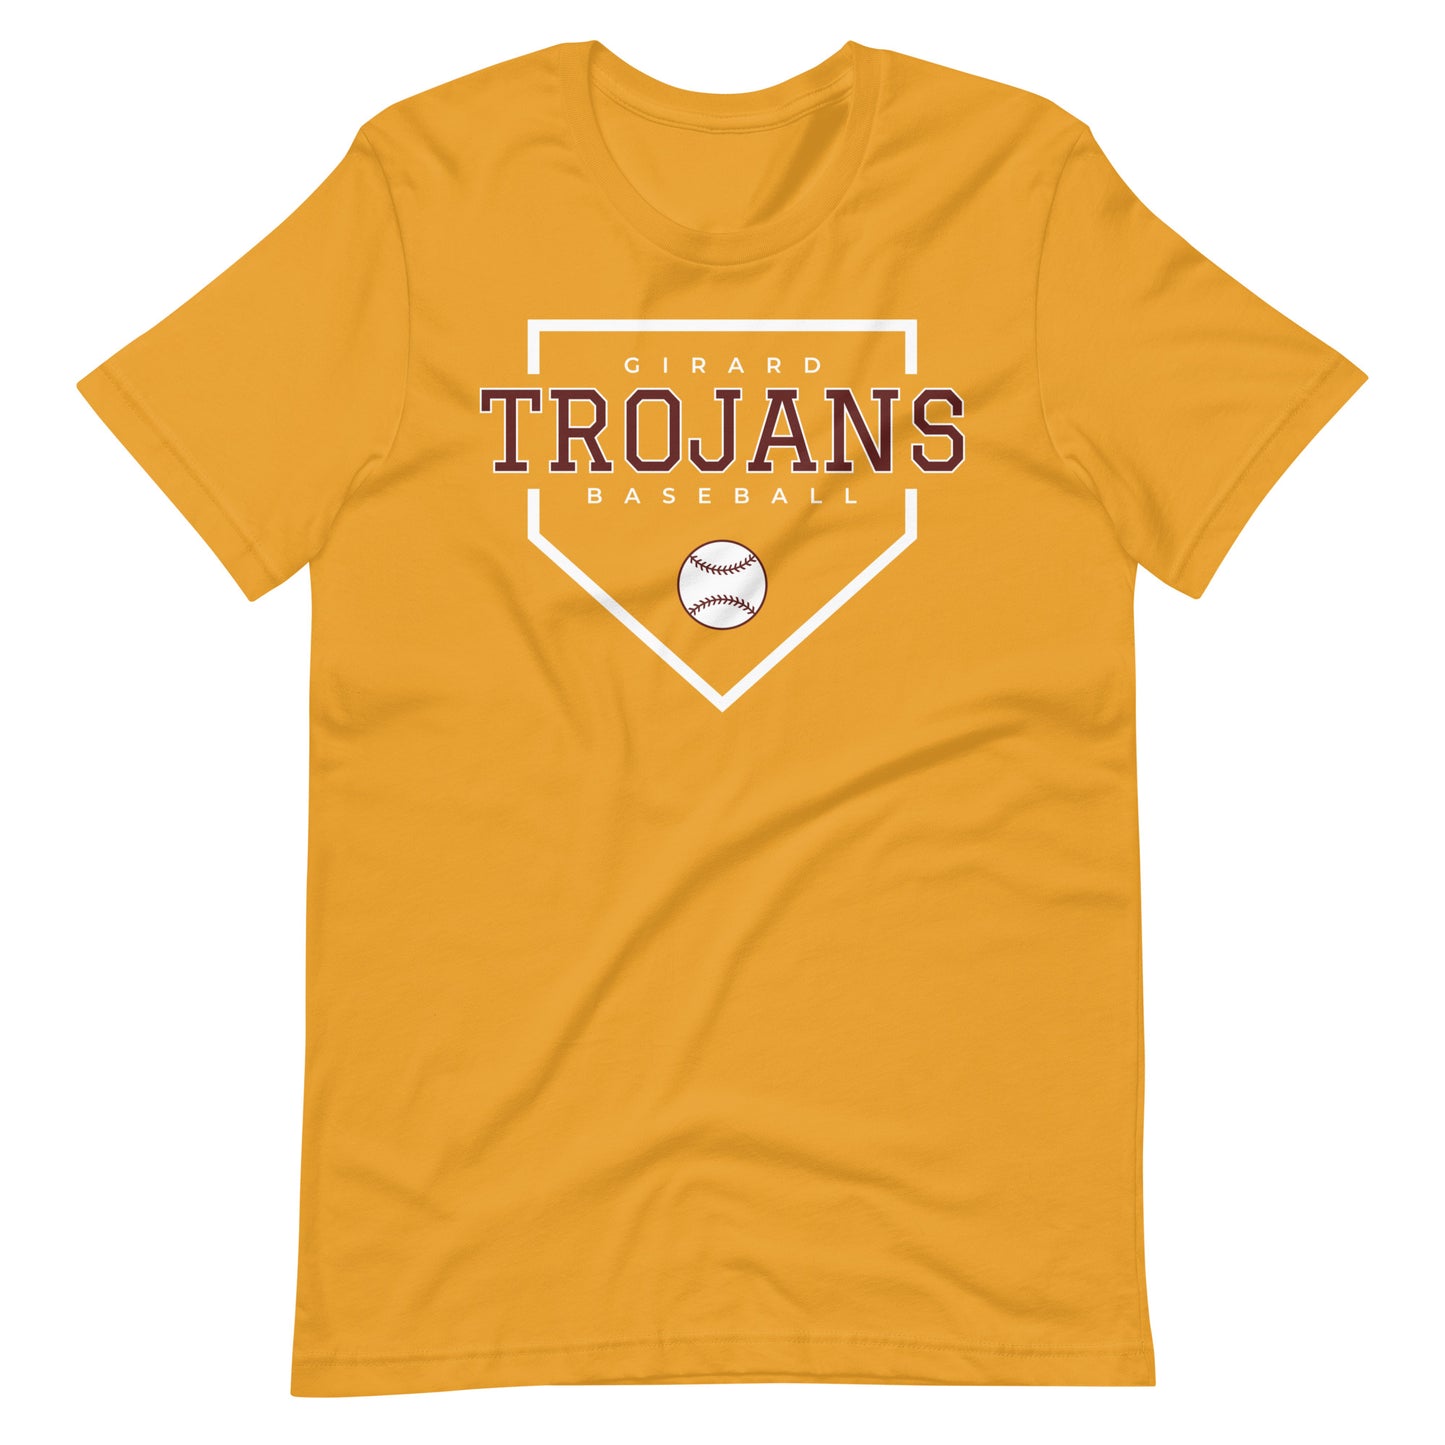 Trojans Baseball Tee